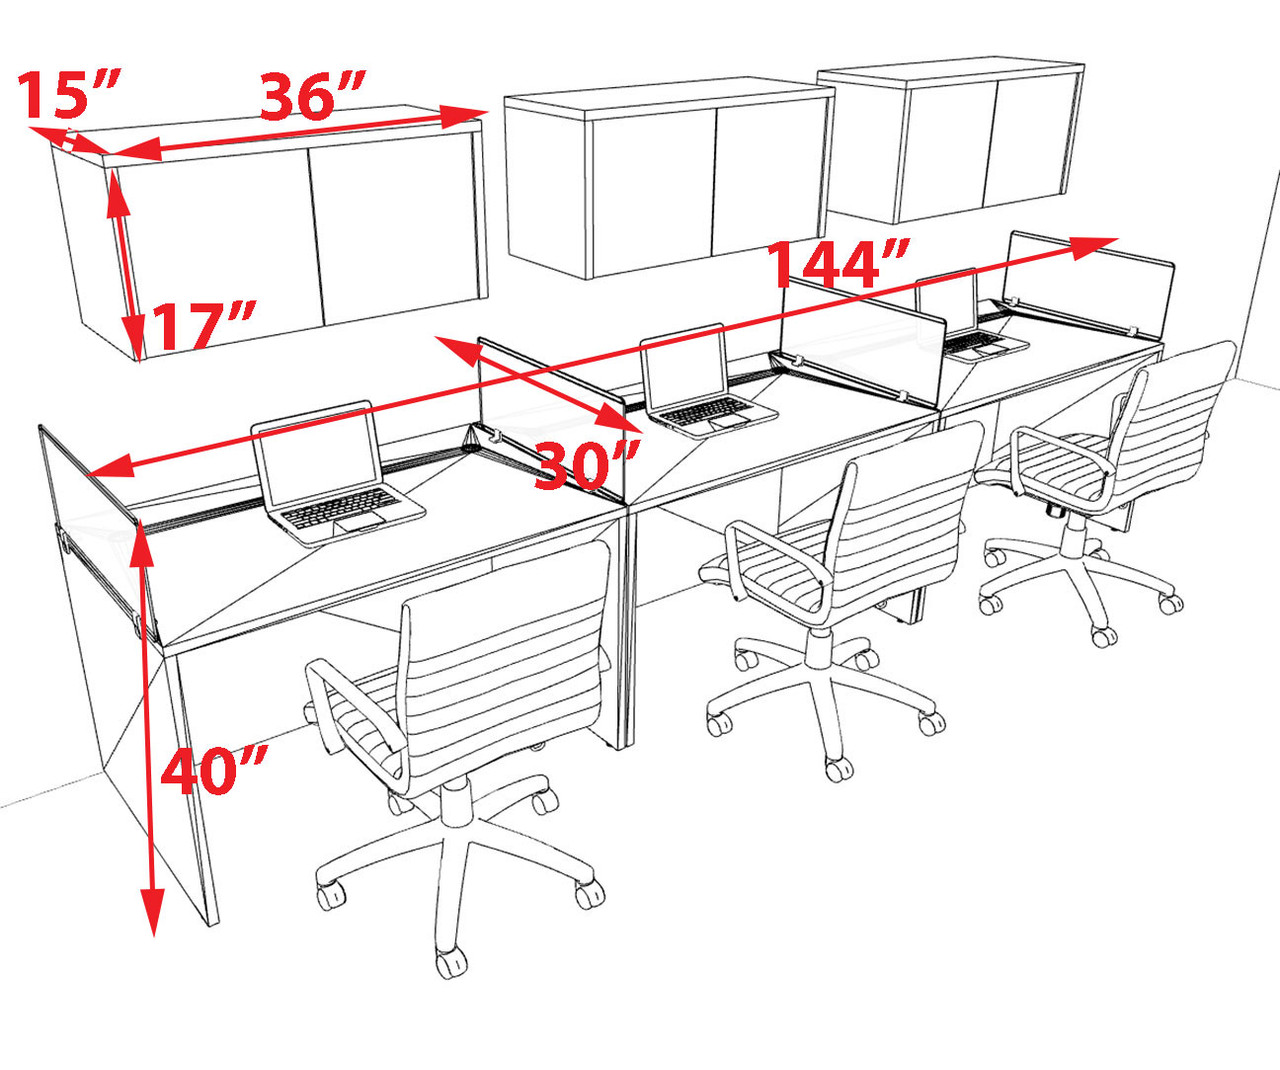 Three Person Modern Acrylic Divider Office Workstation Desk Set, #OT-SUS-SP31